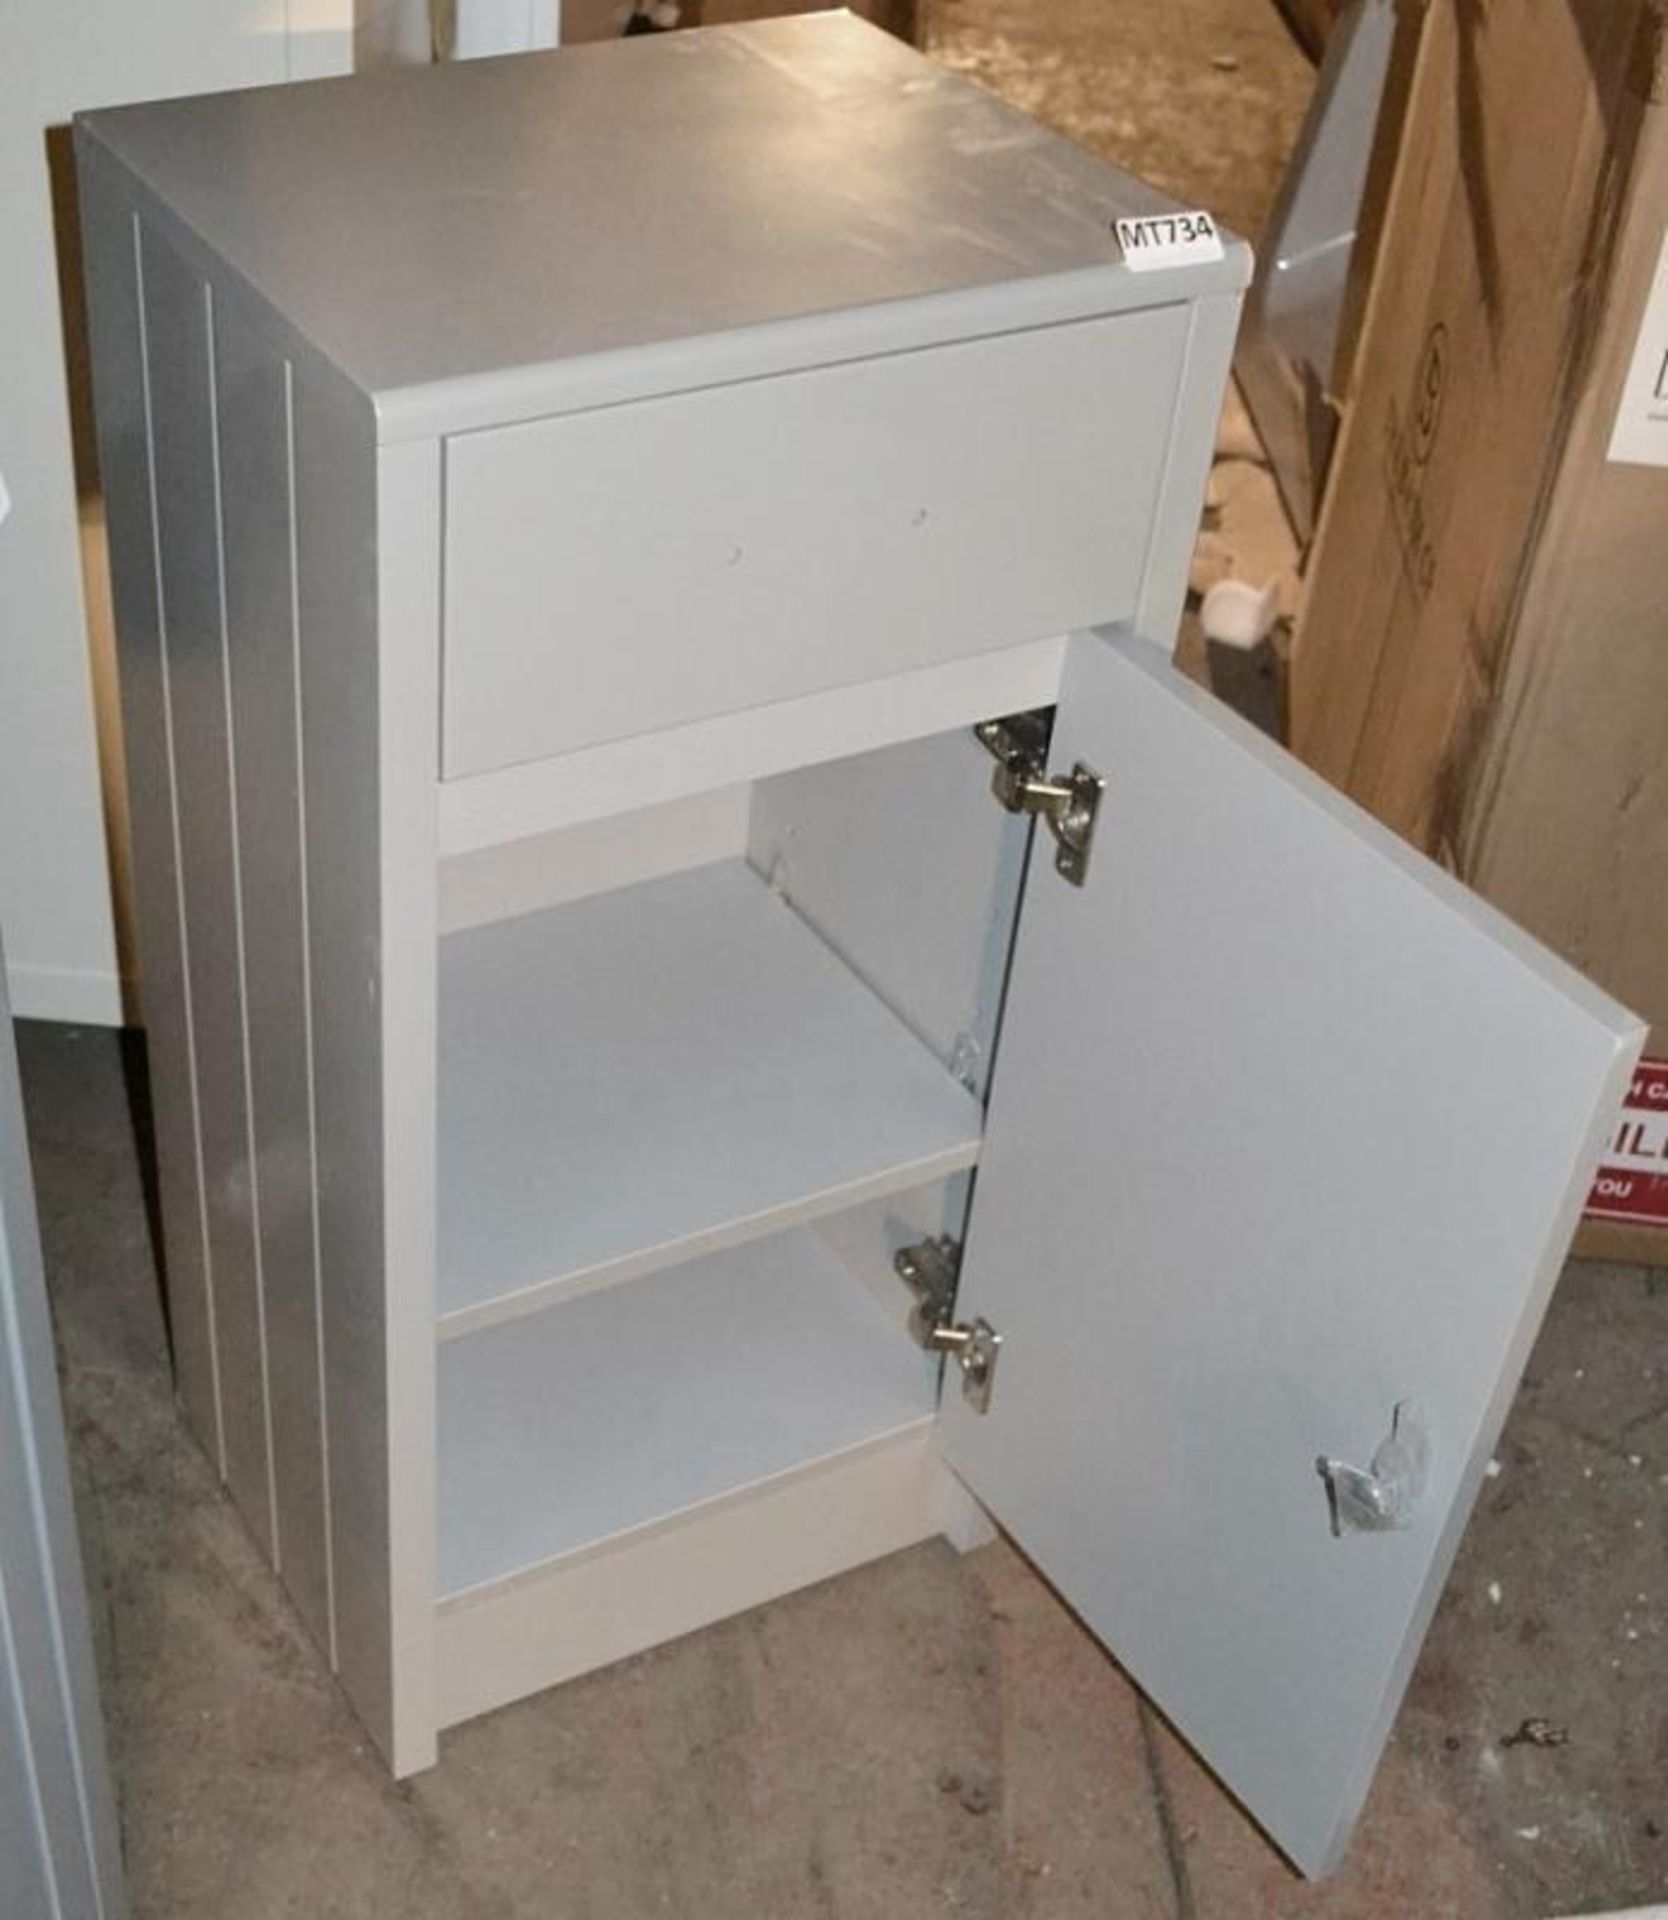 1 x Winchester 1-Door, 1-Drawer Bathroom Storage Unit In Light Grey - Ex-Display Stock - Dimensions: - Image 3 of 5